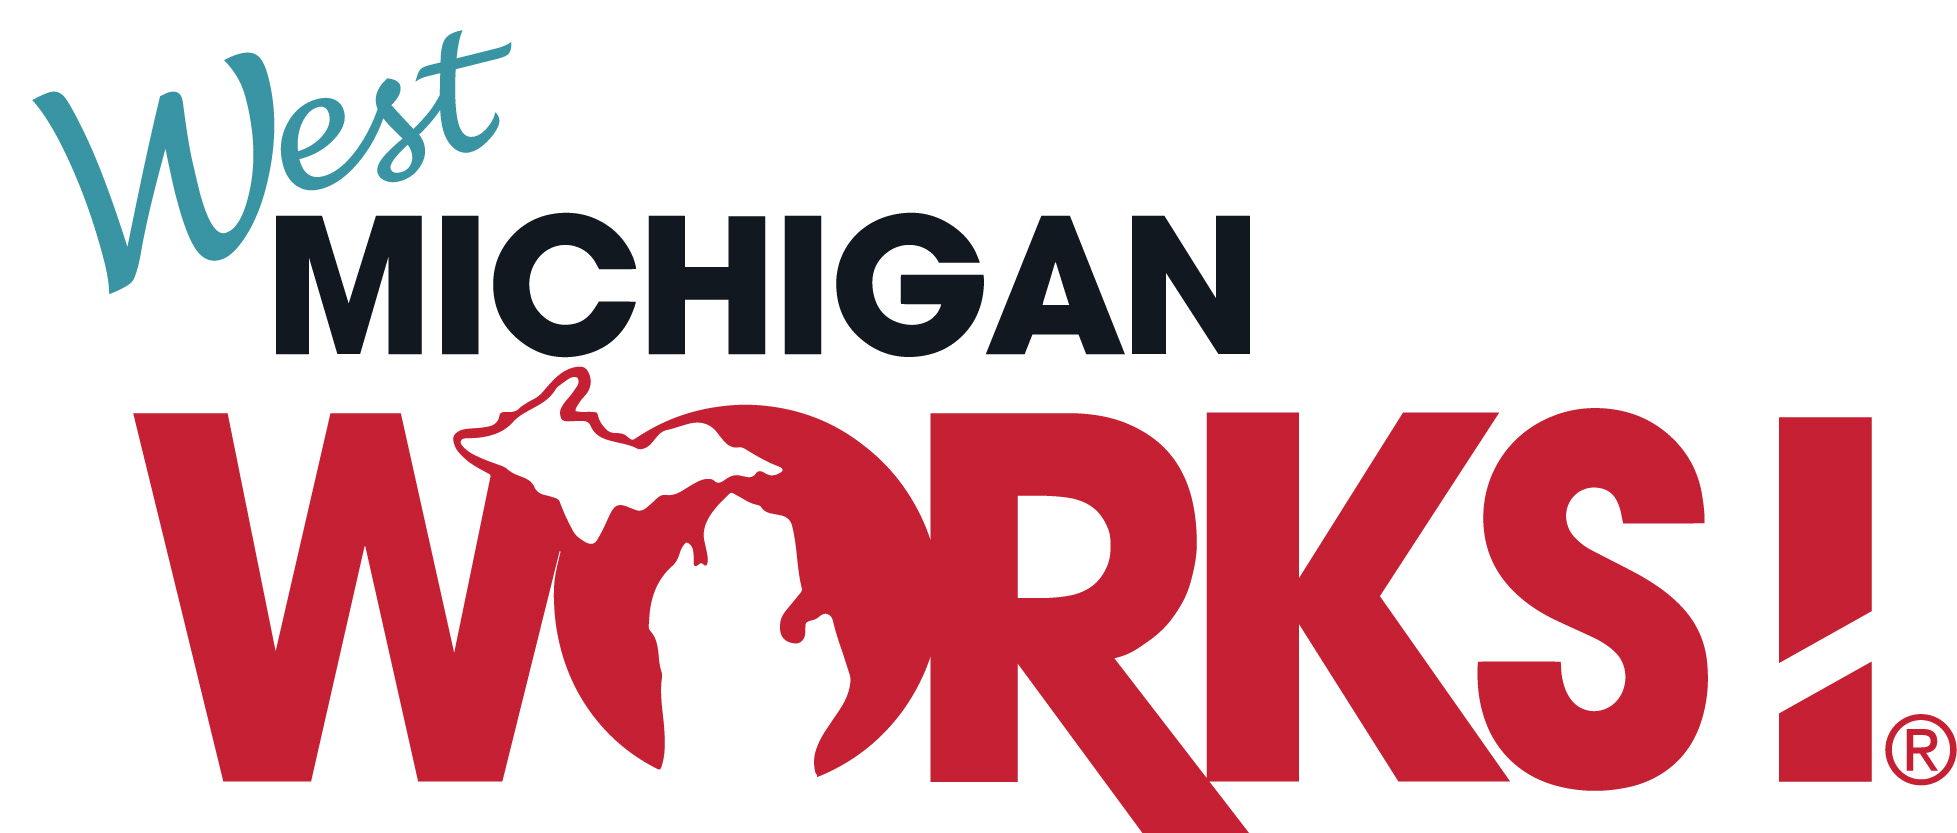 West Michigan Works logo